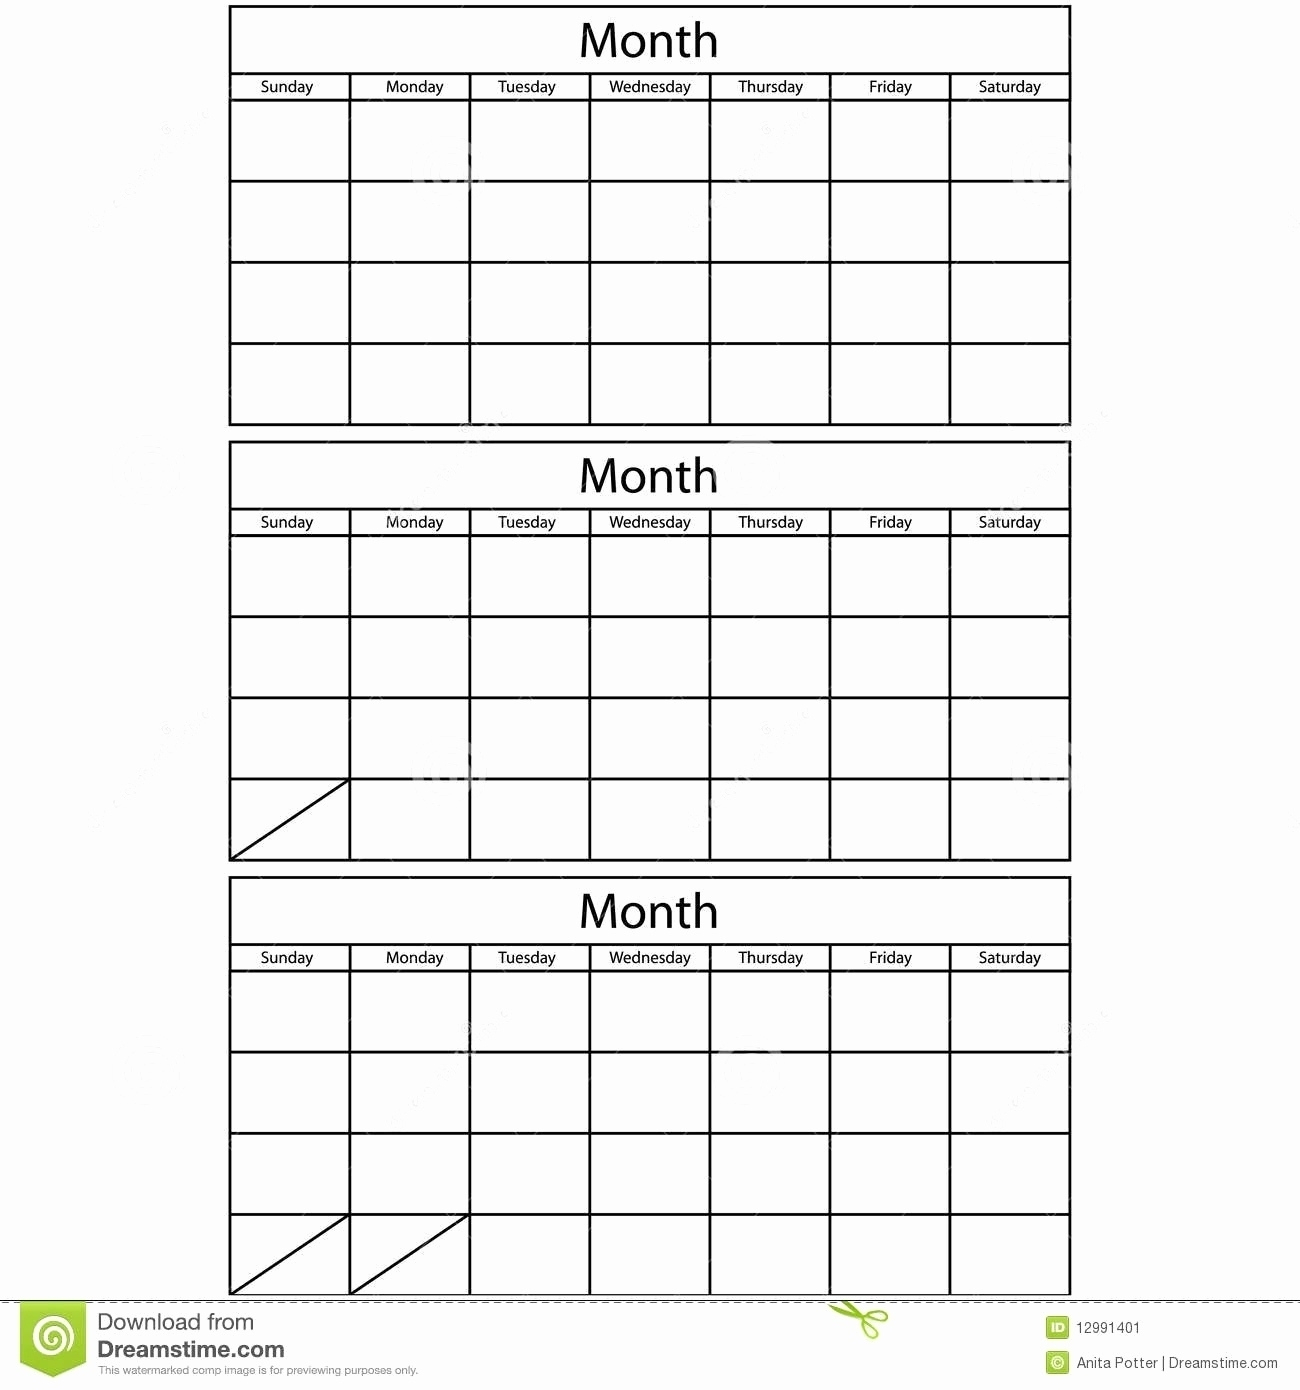 Free 3 Month Calendar Templates  Calendar Inspiration Design intended for Printable 3 Month Calendar